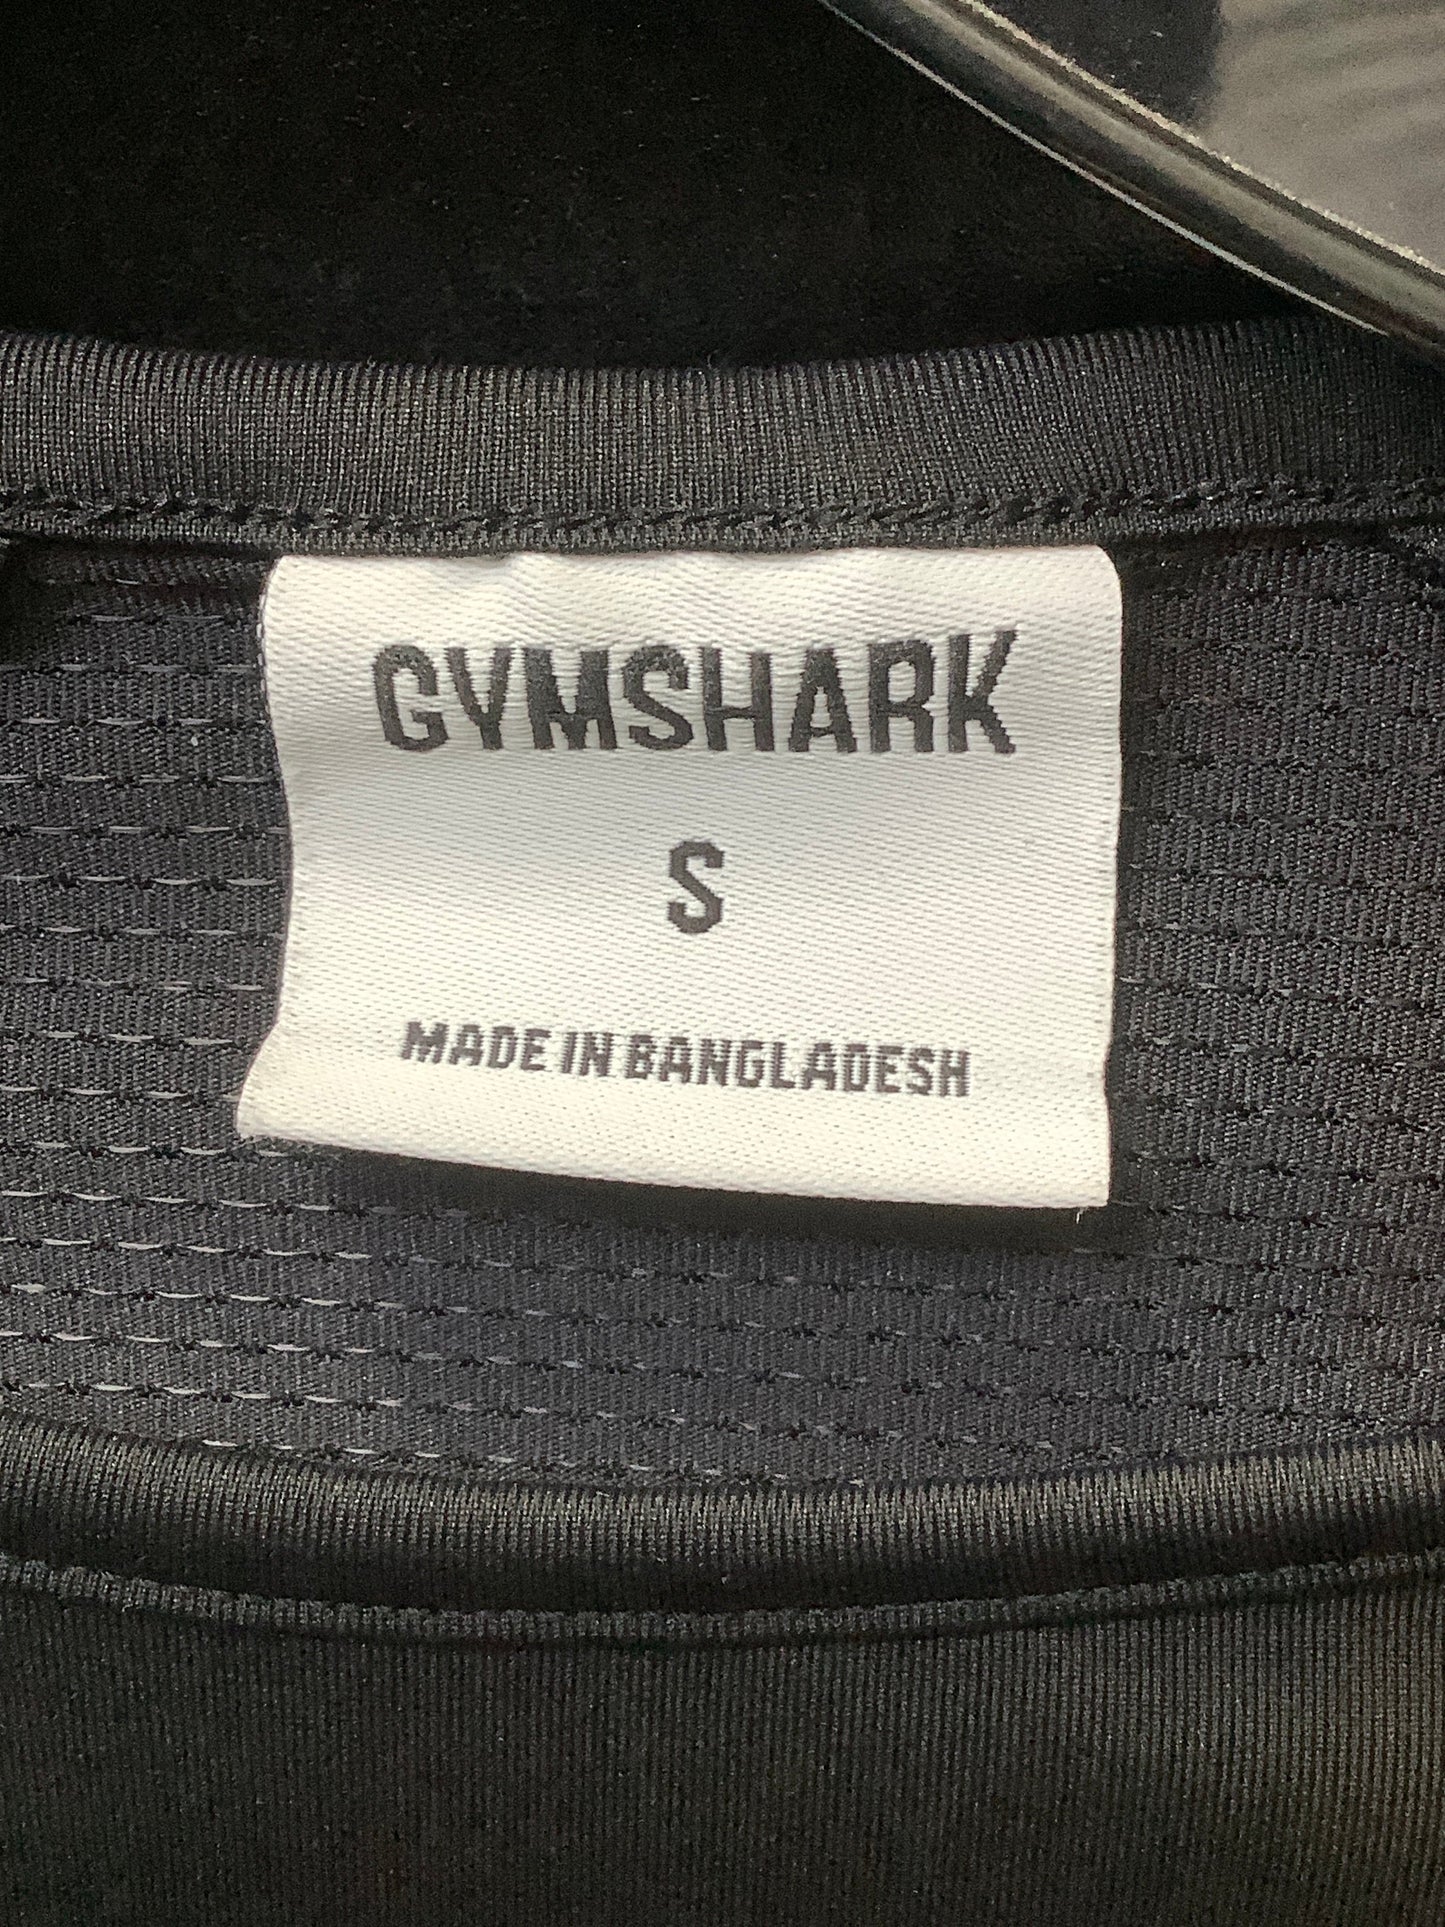 Black Athletic Top Long Sleeve Crewneck Gym Shark, Size S